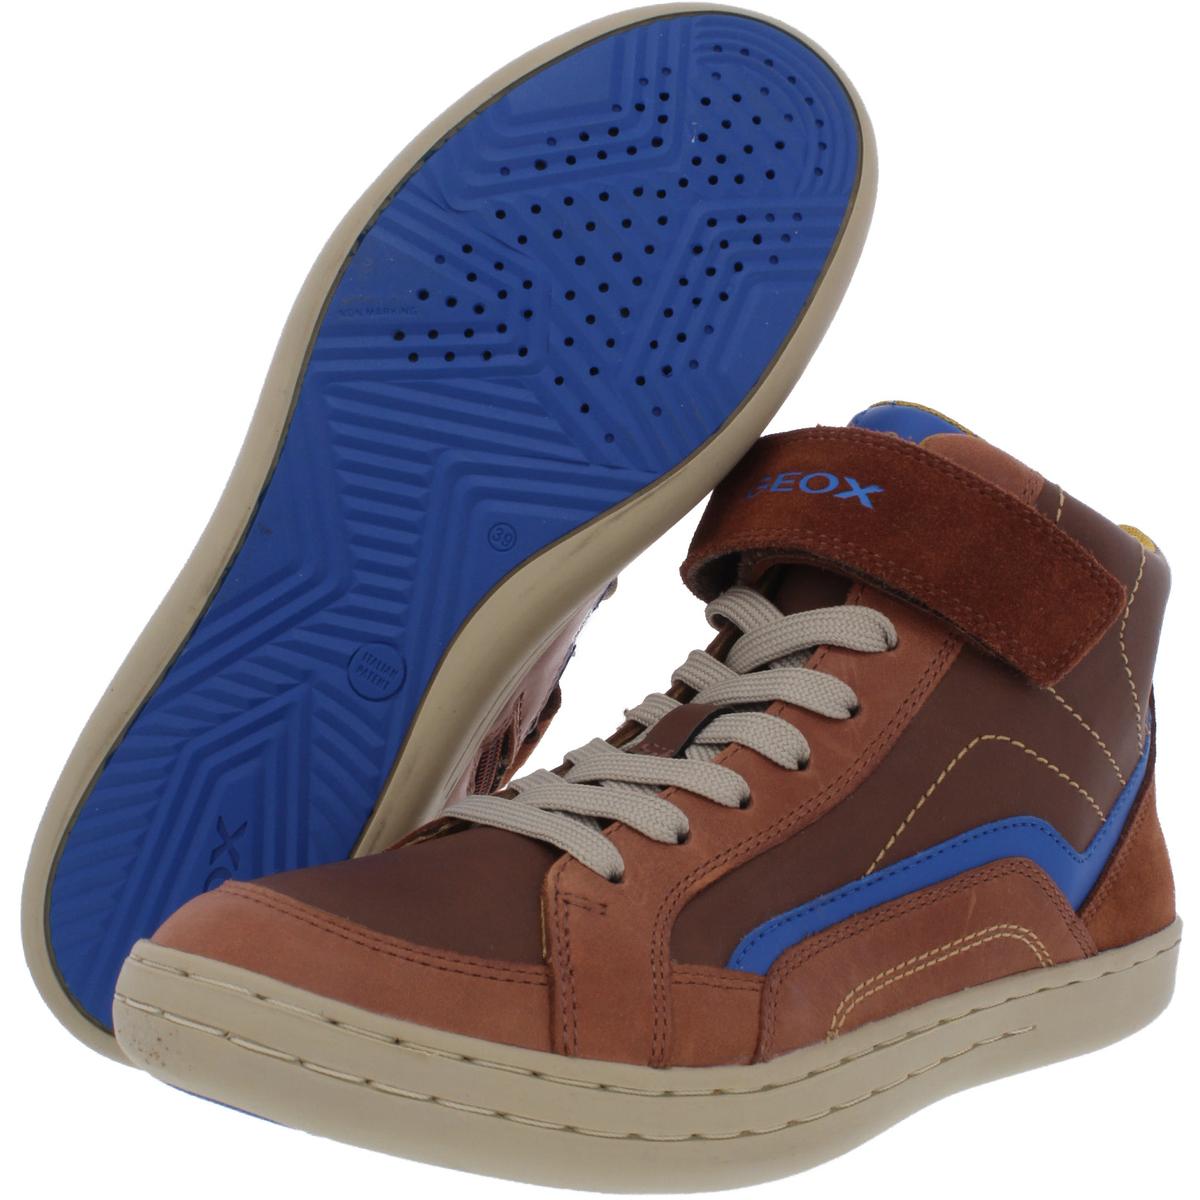 Retentie vlees Briesje Geox Respira Boys Garcia Faux Leather Lace Up High Top Sneakers Shoes BHFO  9297 | eBay